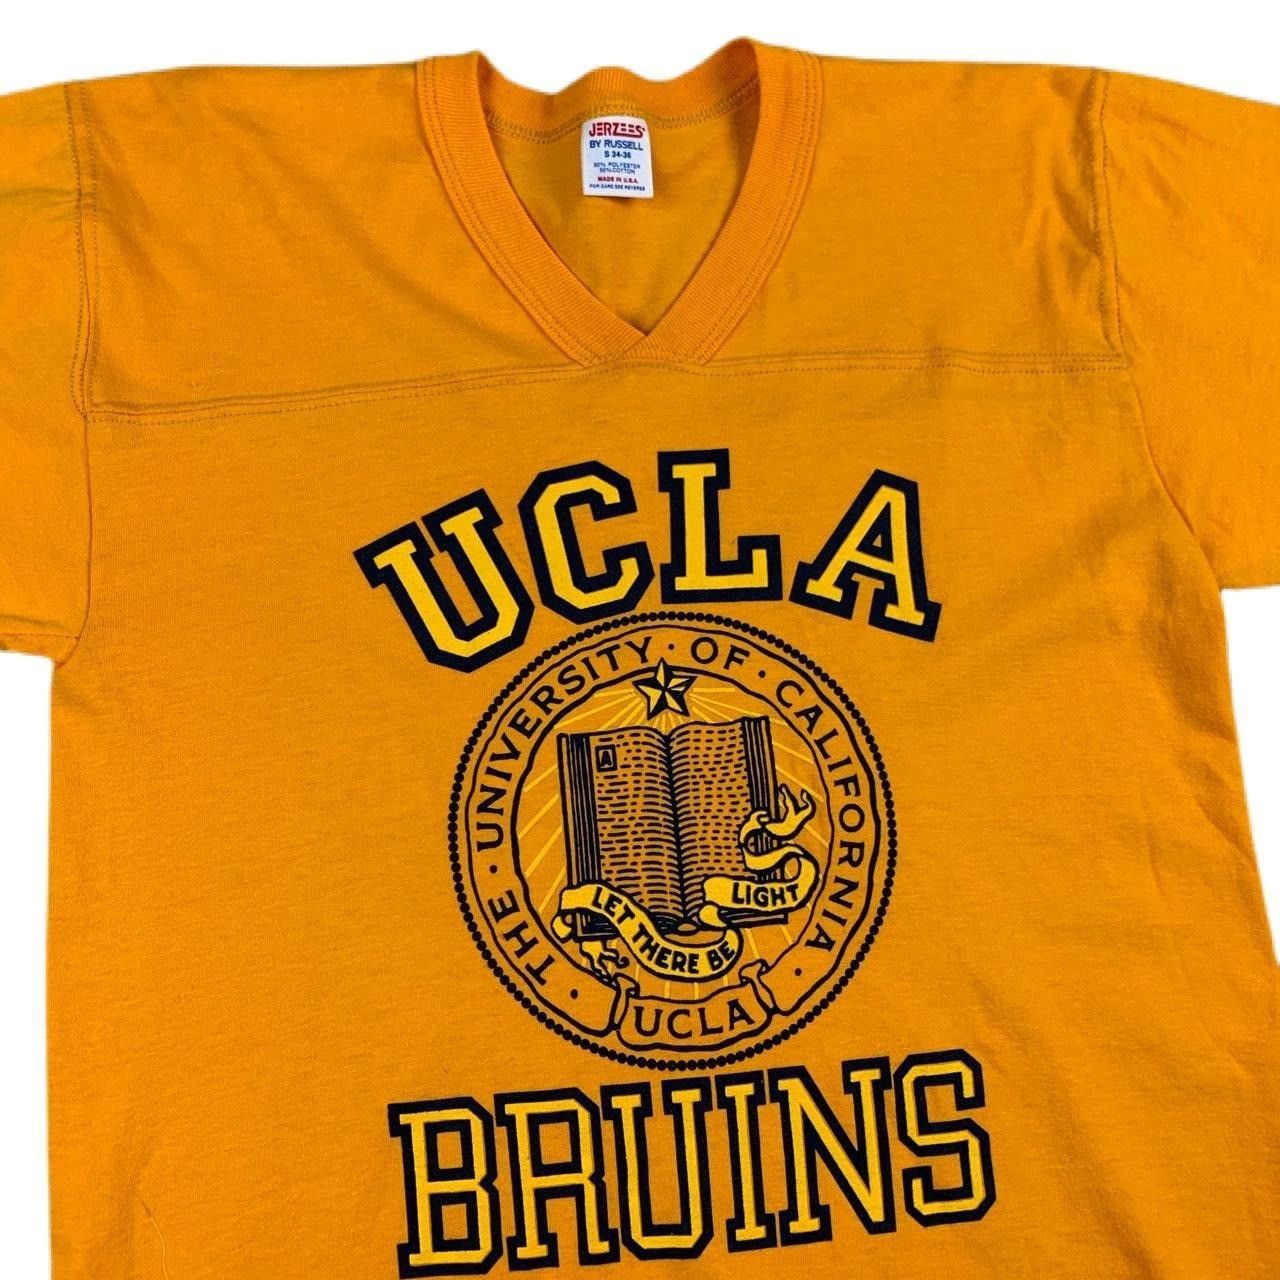 Vintage Vintage 80s Ucla Bruins Bruins Jersey T Shirt Size US S / EU 44-46 / 1 - 3 Thumbnail